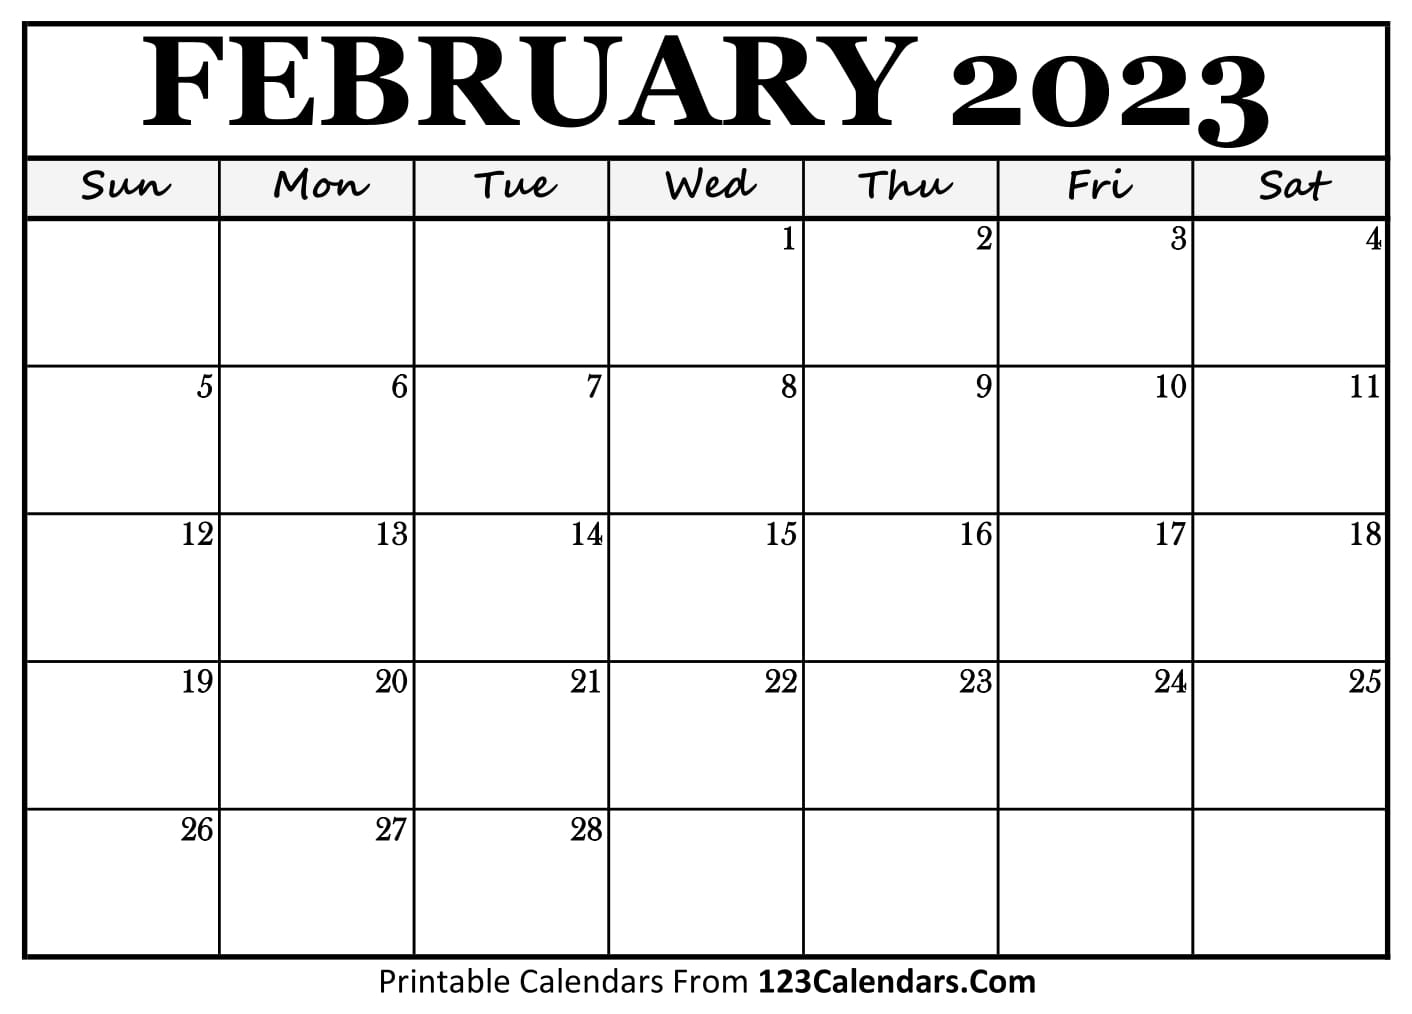 printable-february-2023-calendar-templates-123calendars